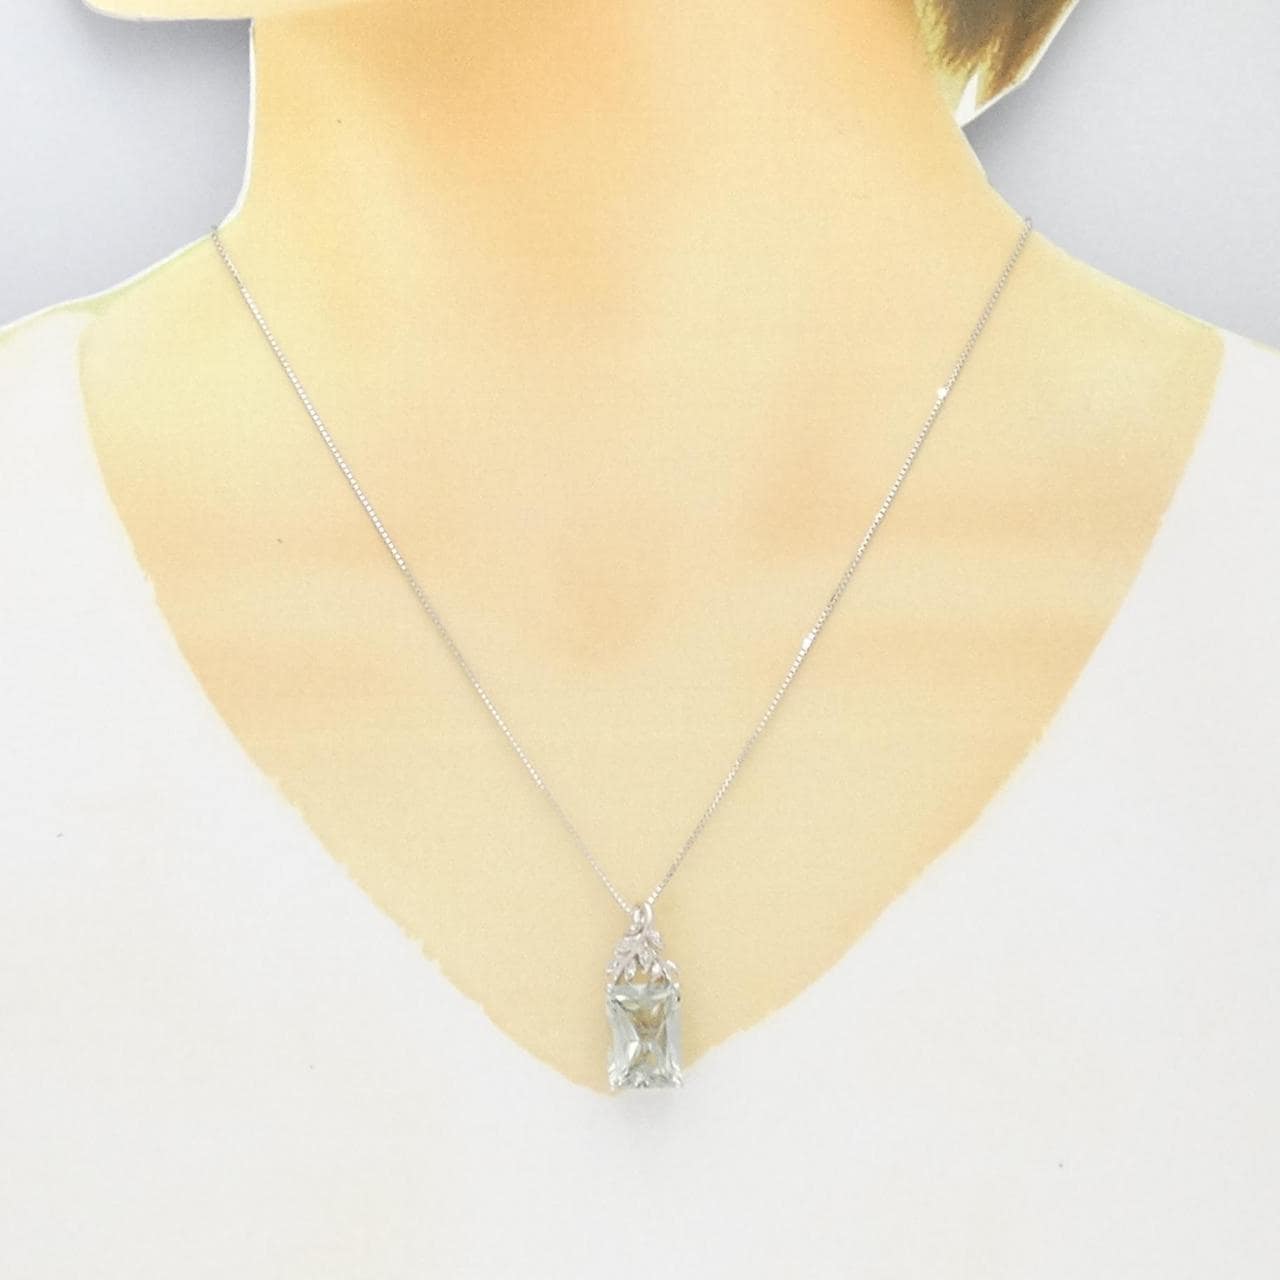 K18WG Quartz necklace